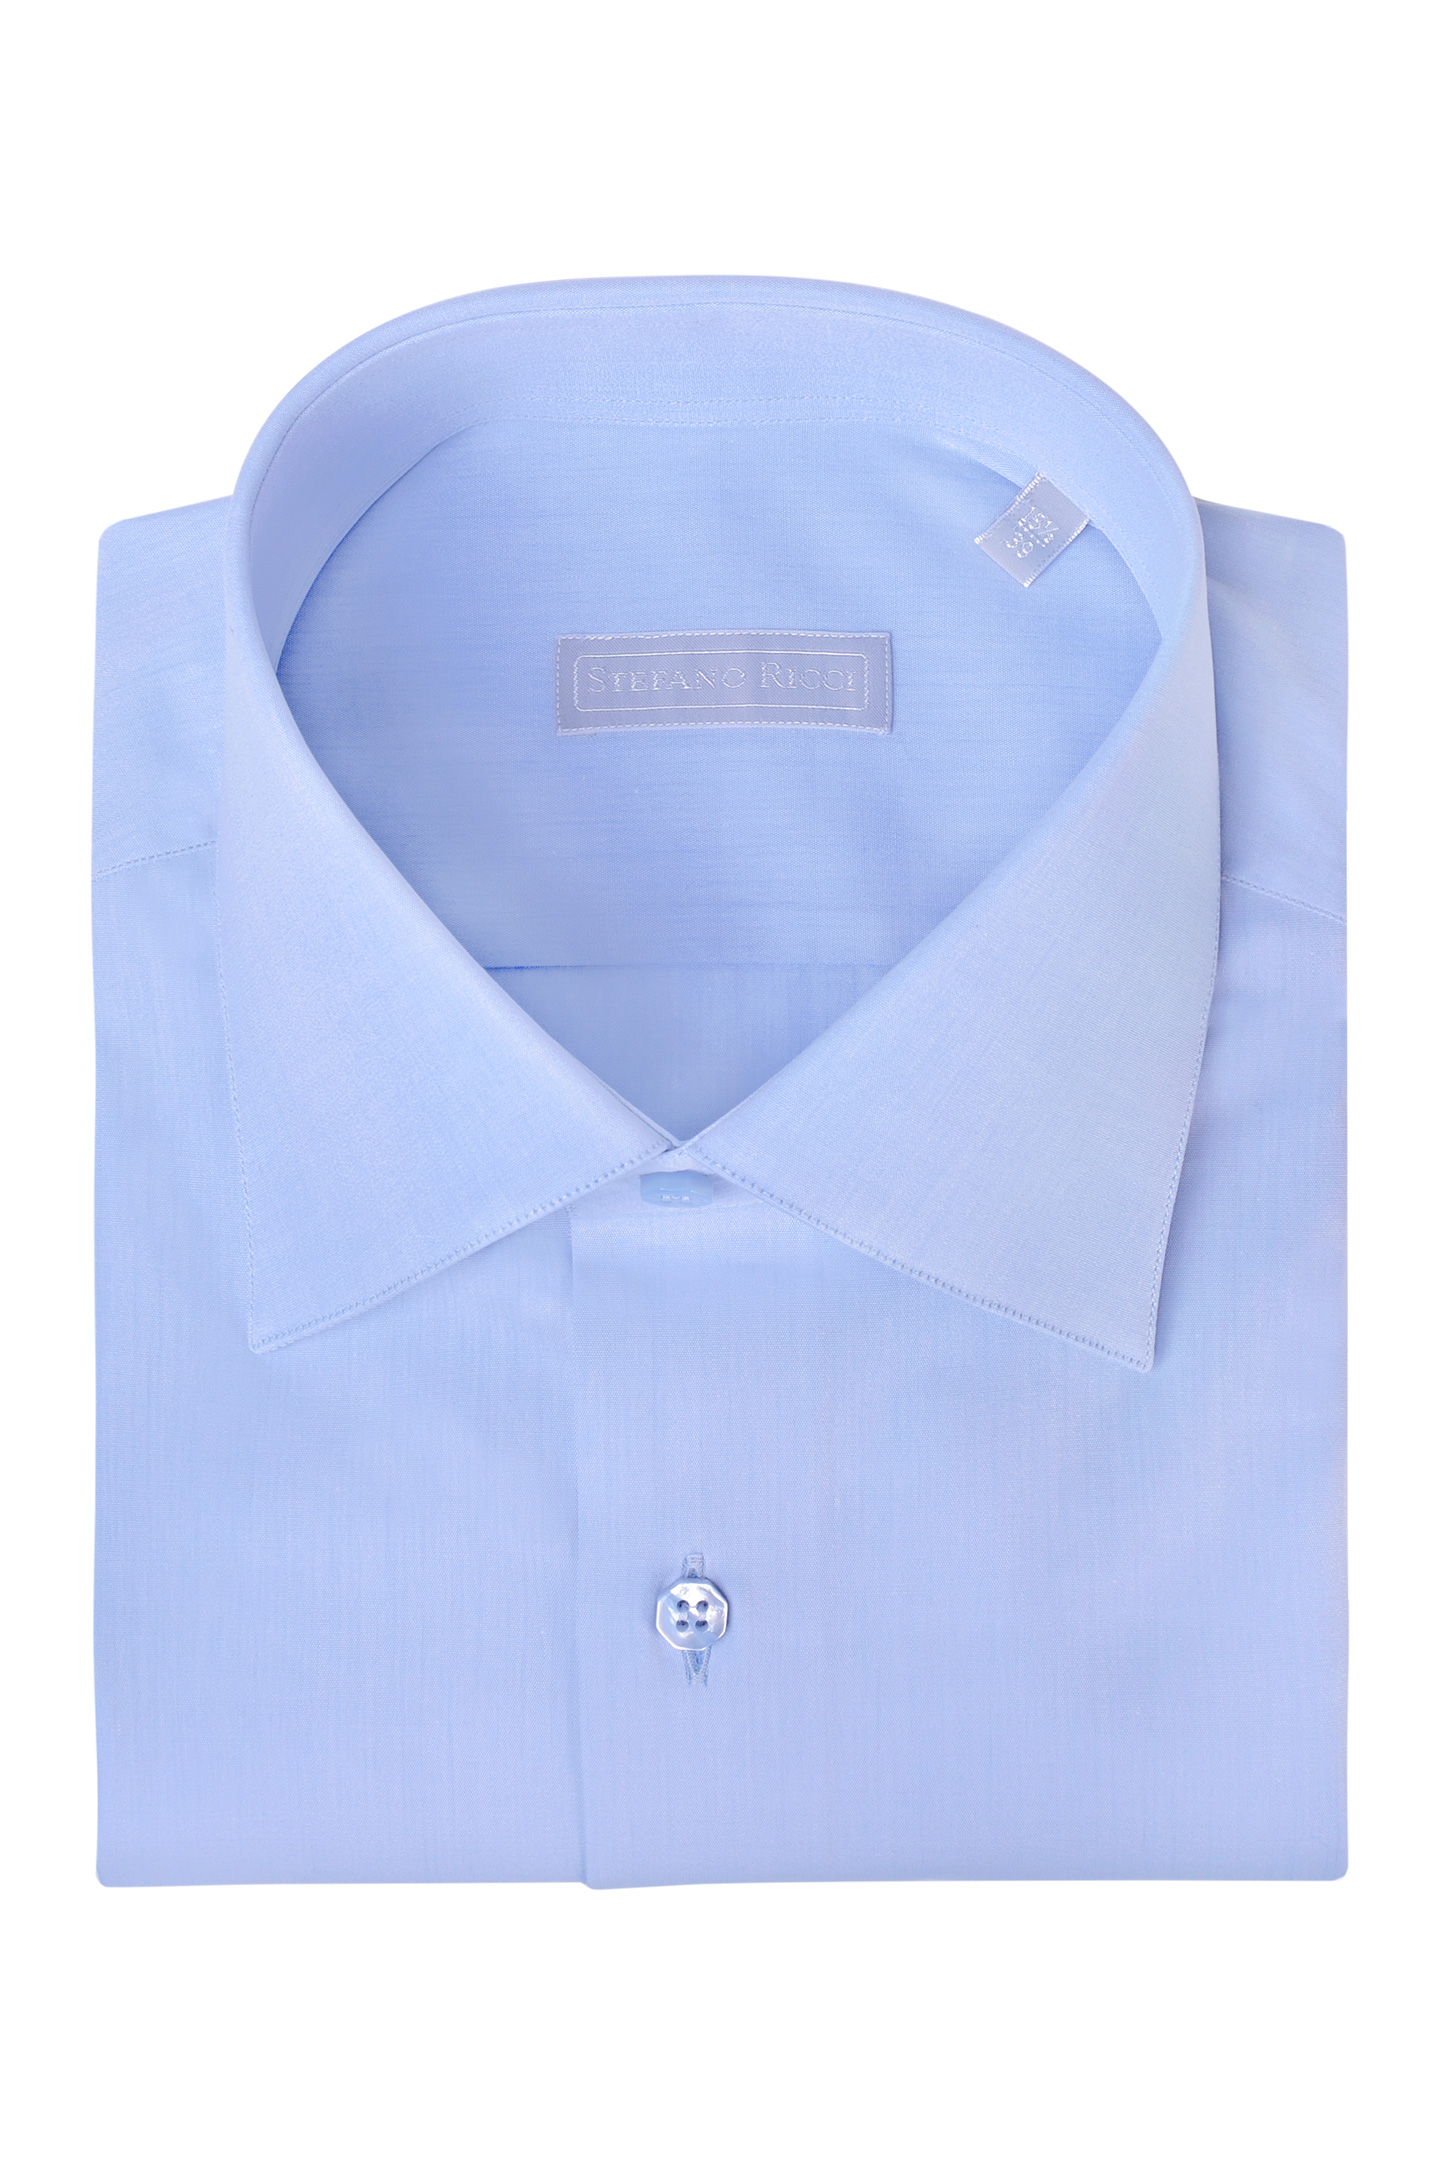 Рубашка STEFANO RICCI MC003678 M1450, цвет: Голубой, Мужской